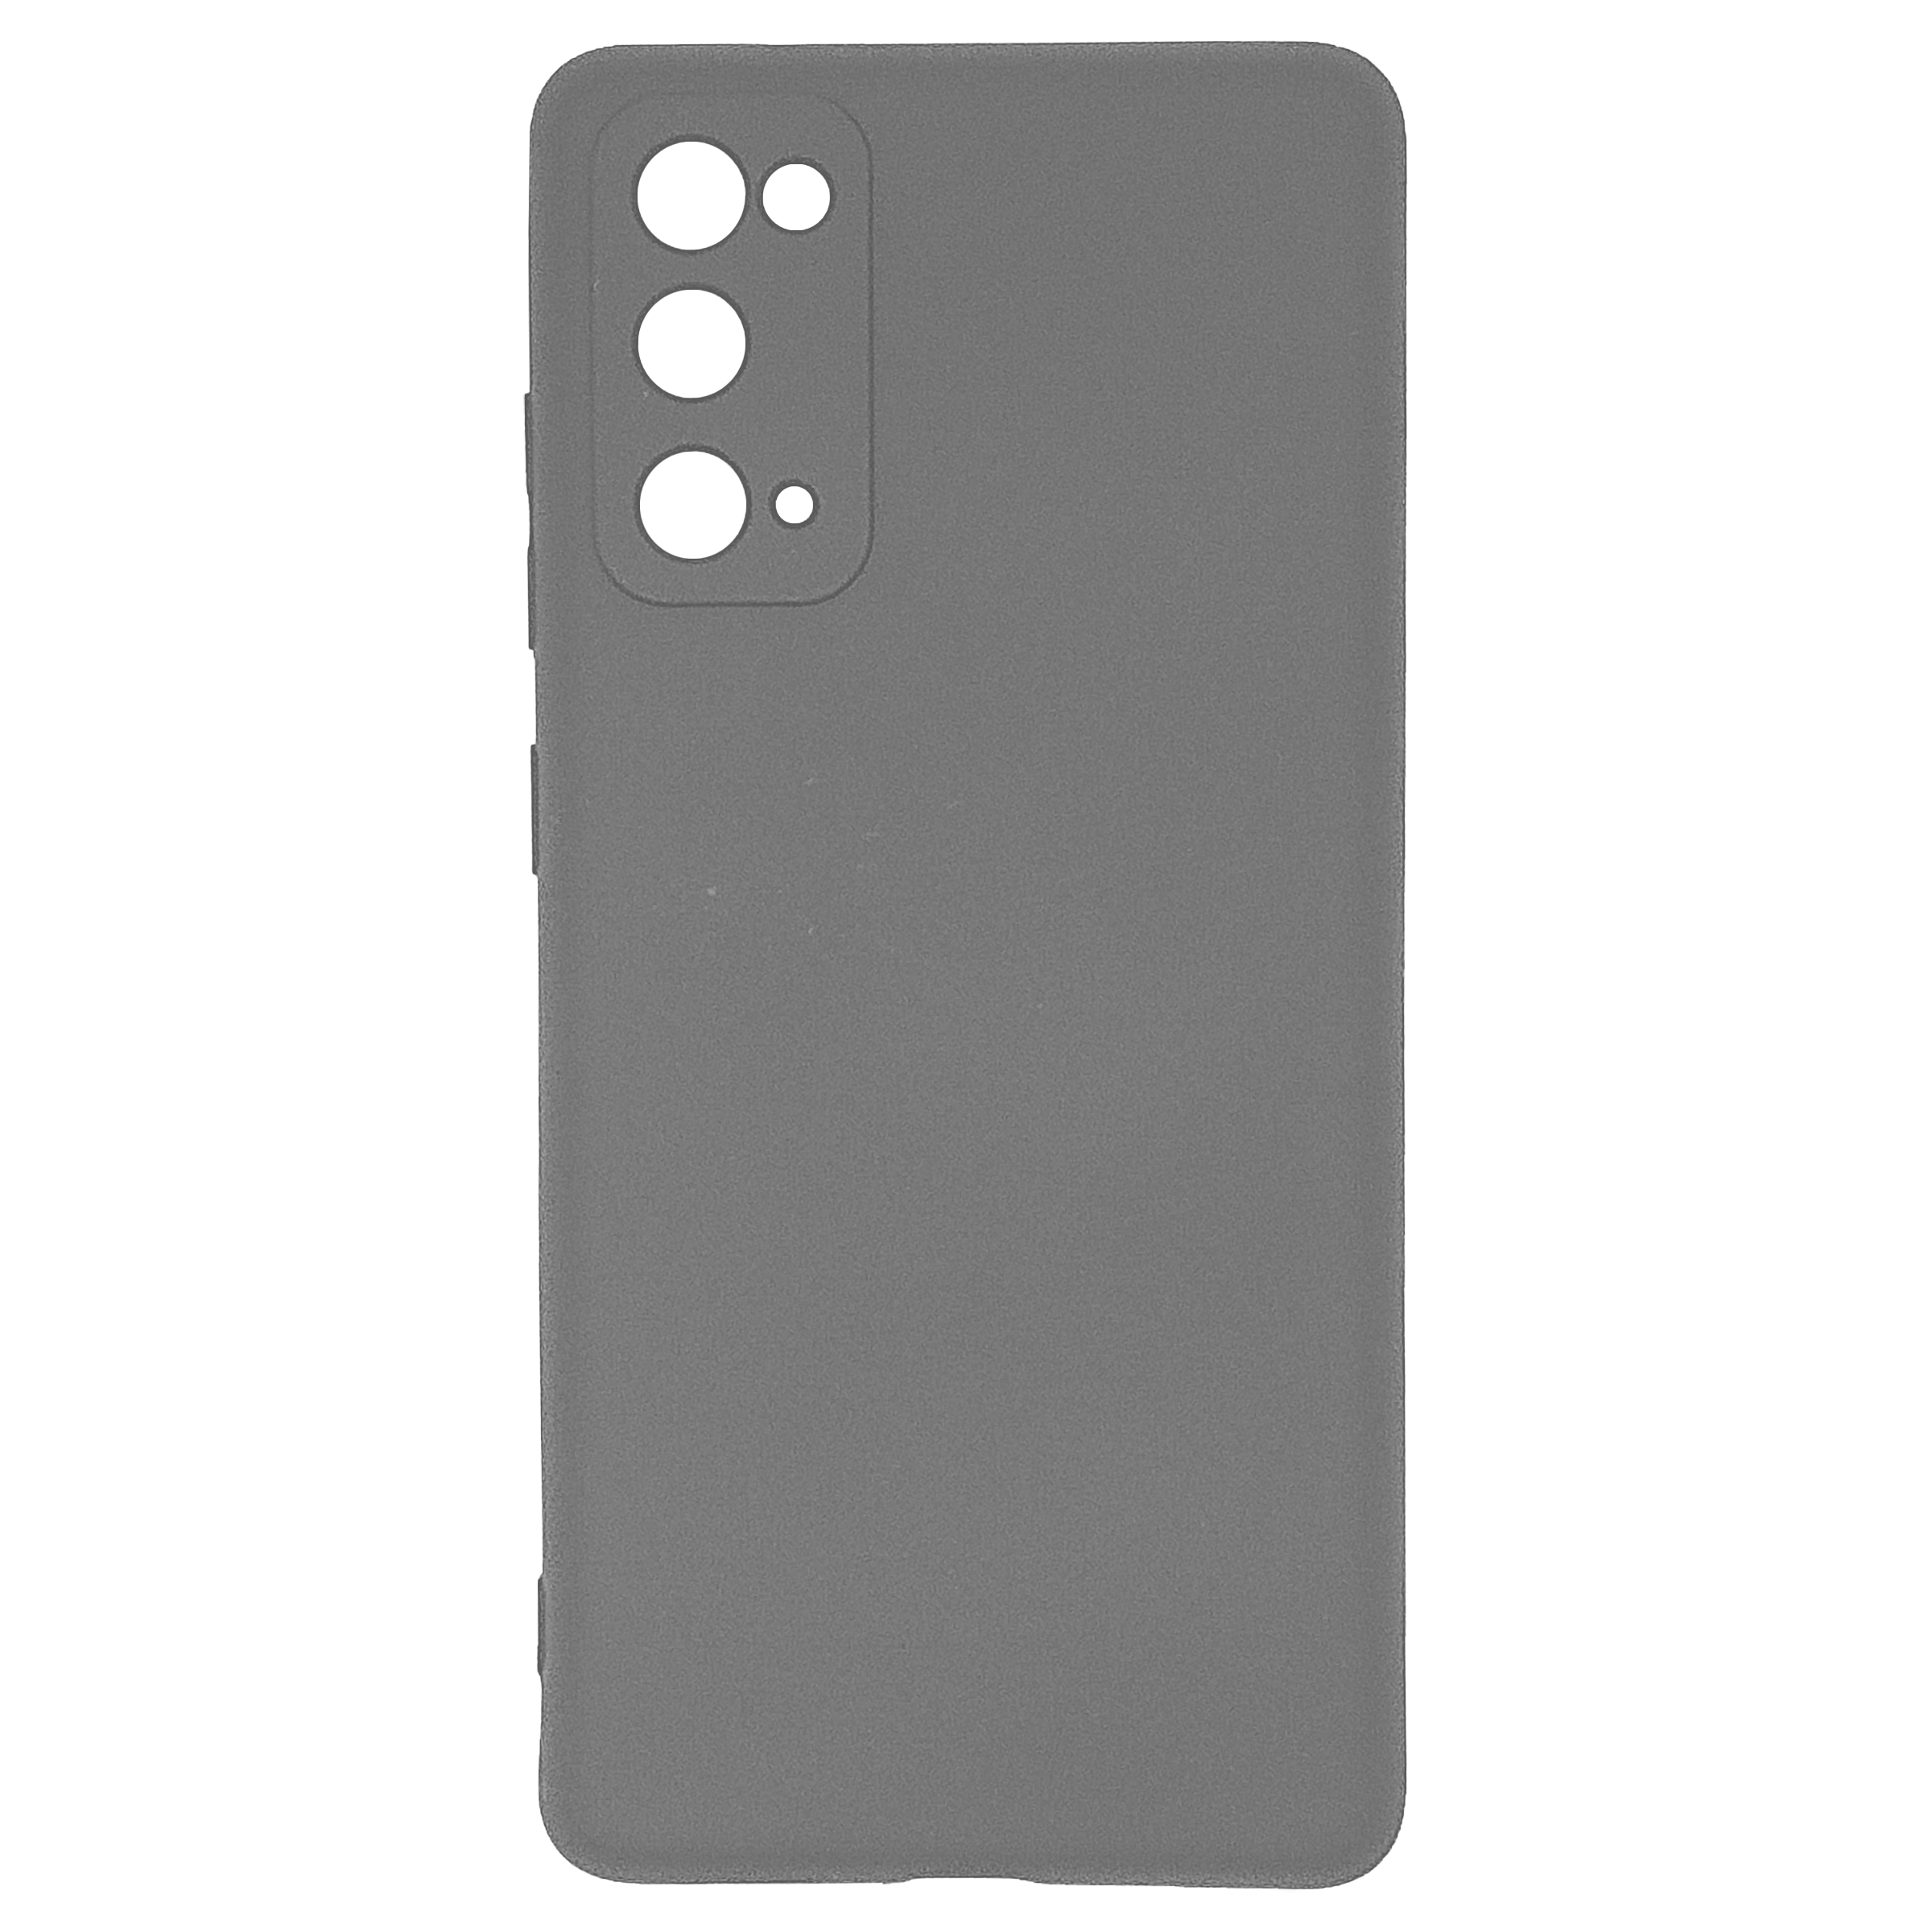 Soundrevo - Soundrevo TPU Back Case For samsung Galaxy S20 FE 5G (Anti-Slip, C020FE, Grey)